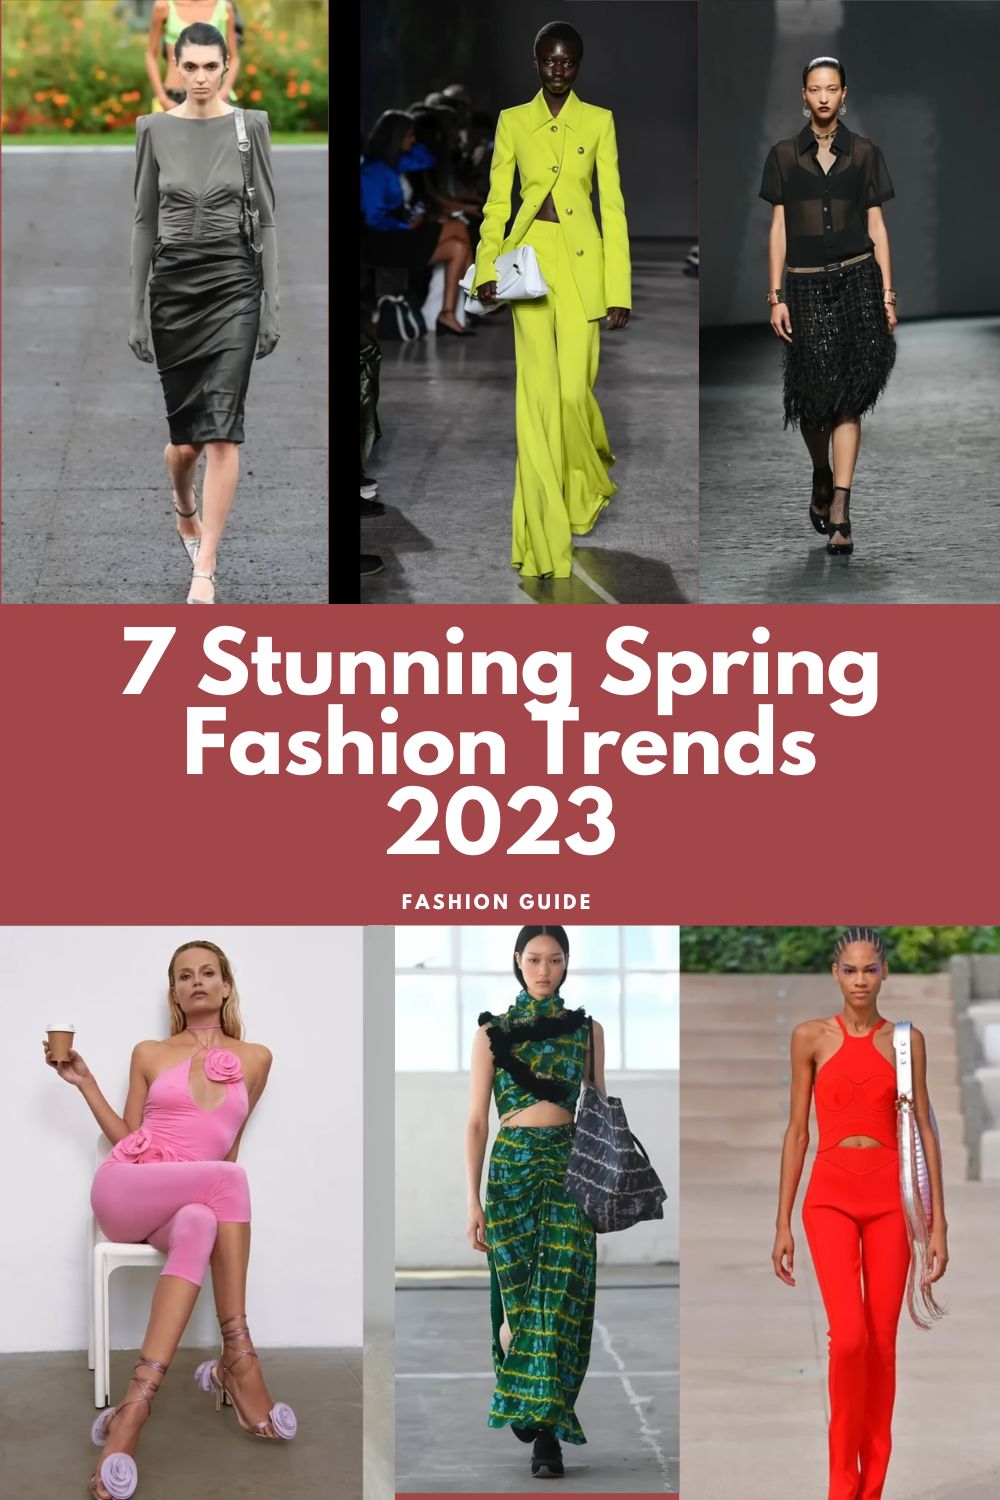 7 Stunning Spring Fashion Trends 2023